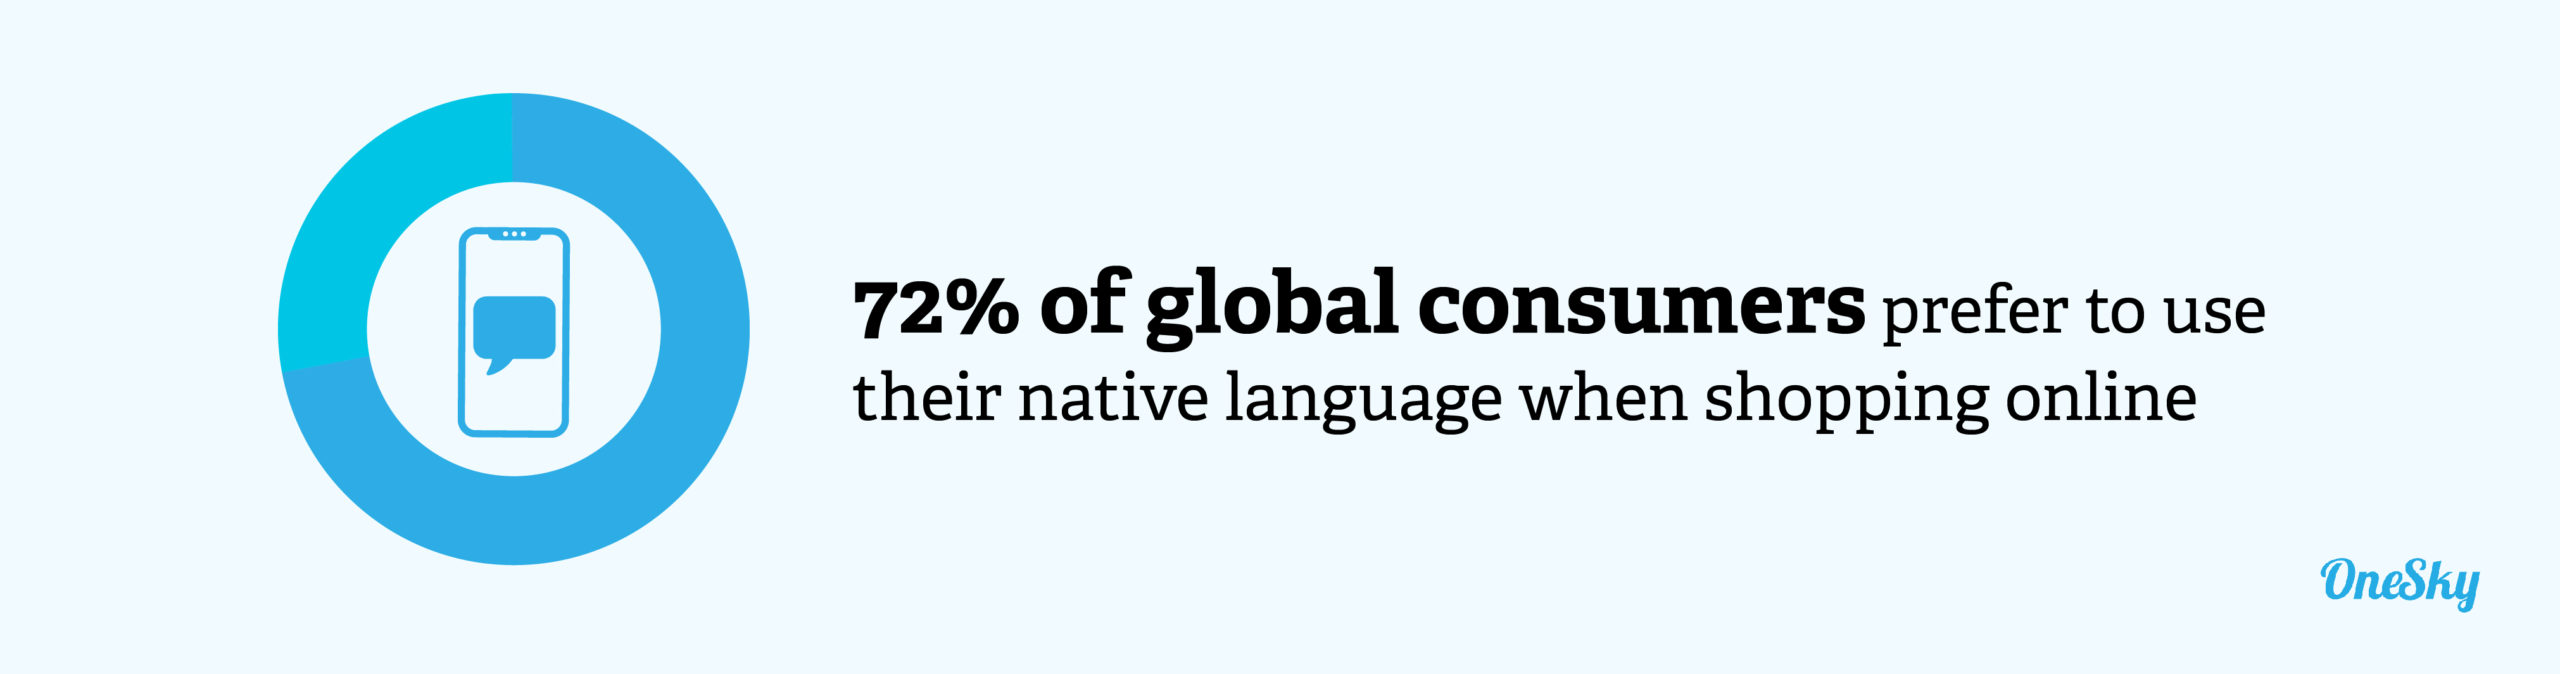 consumers prefer native language shopping